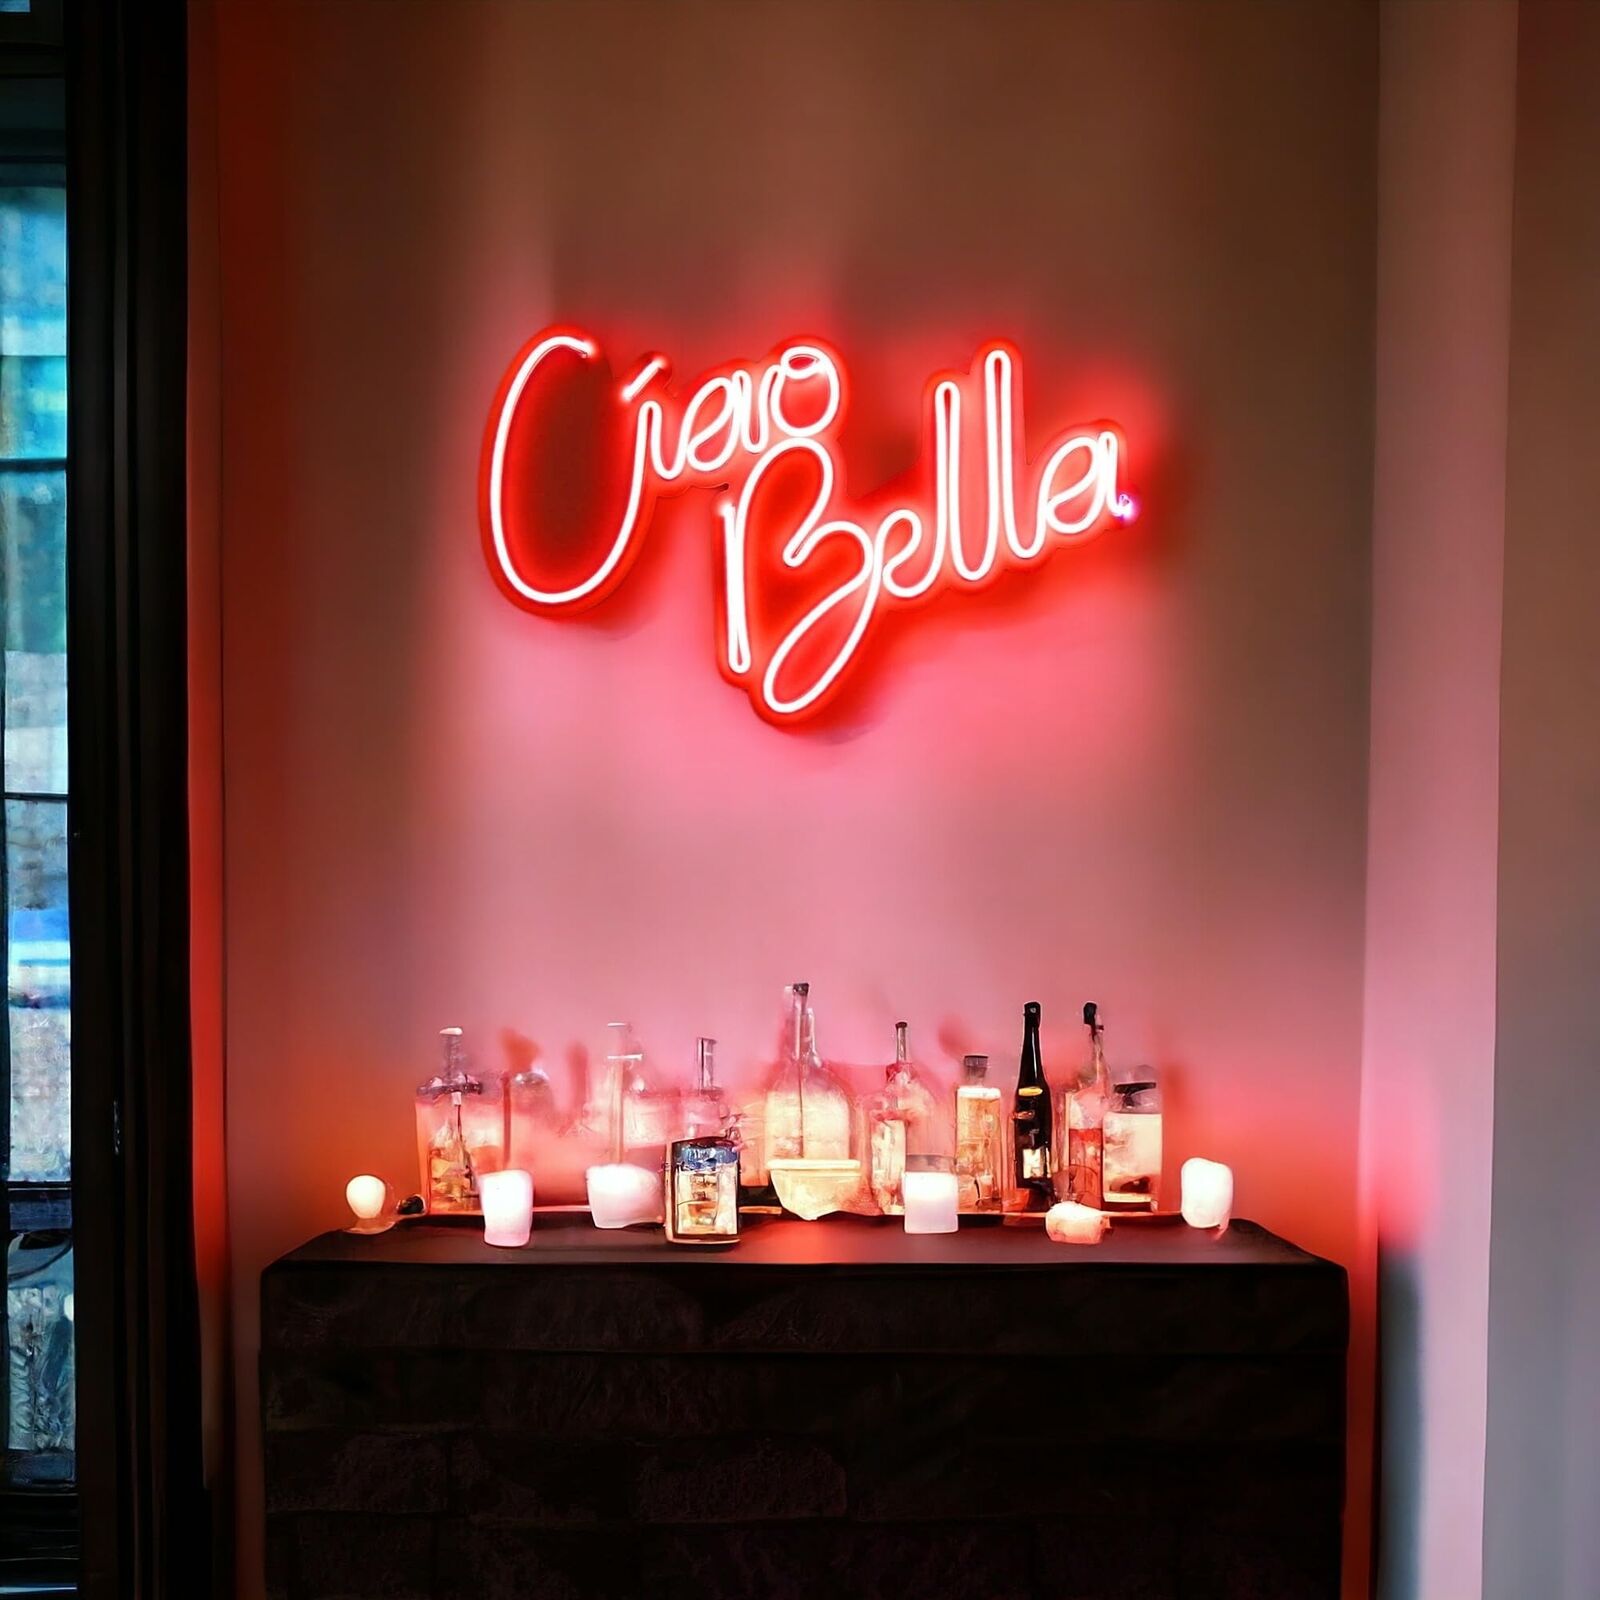 Ciao Bella Neon Sign, Ciao Bella Led Neon Red Light, Ciao Bella Neon for Wall...